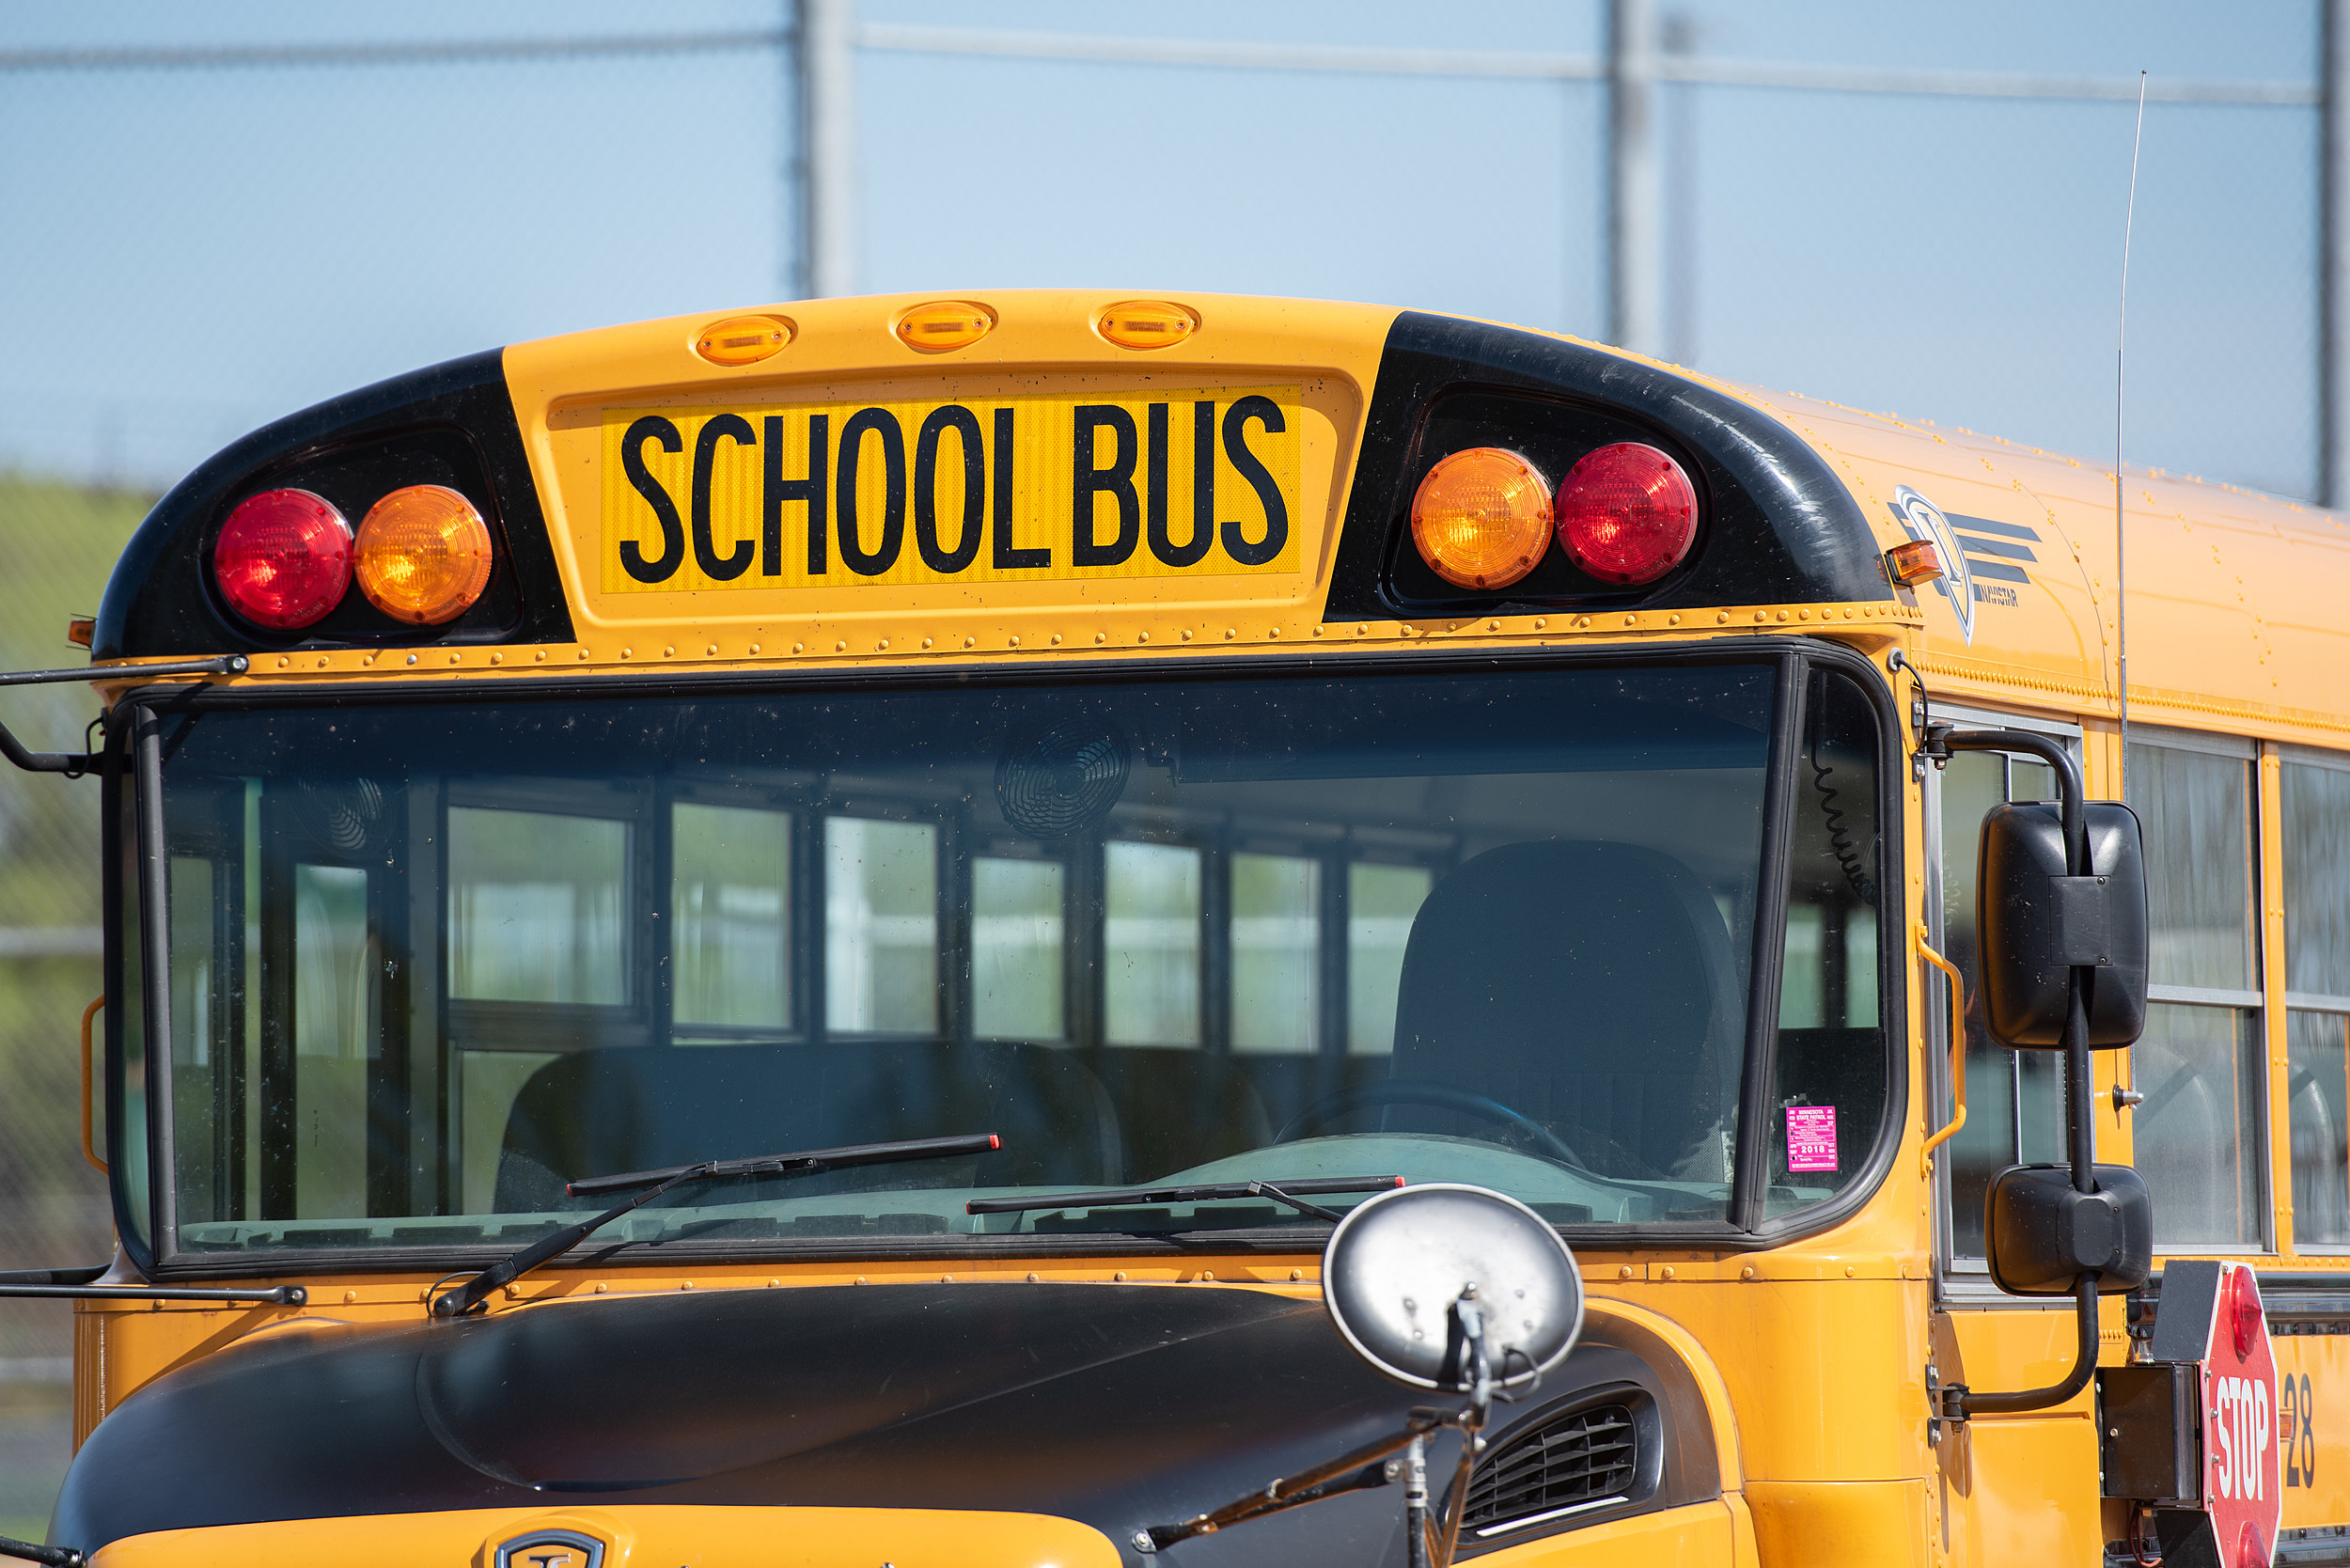 School bus in Duluth, MN